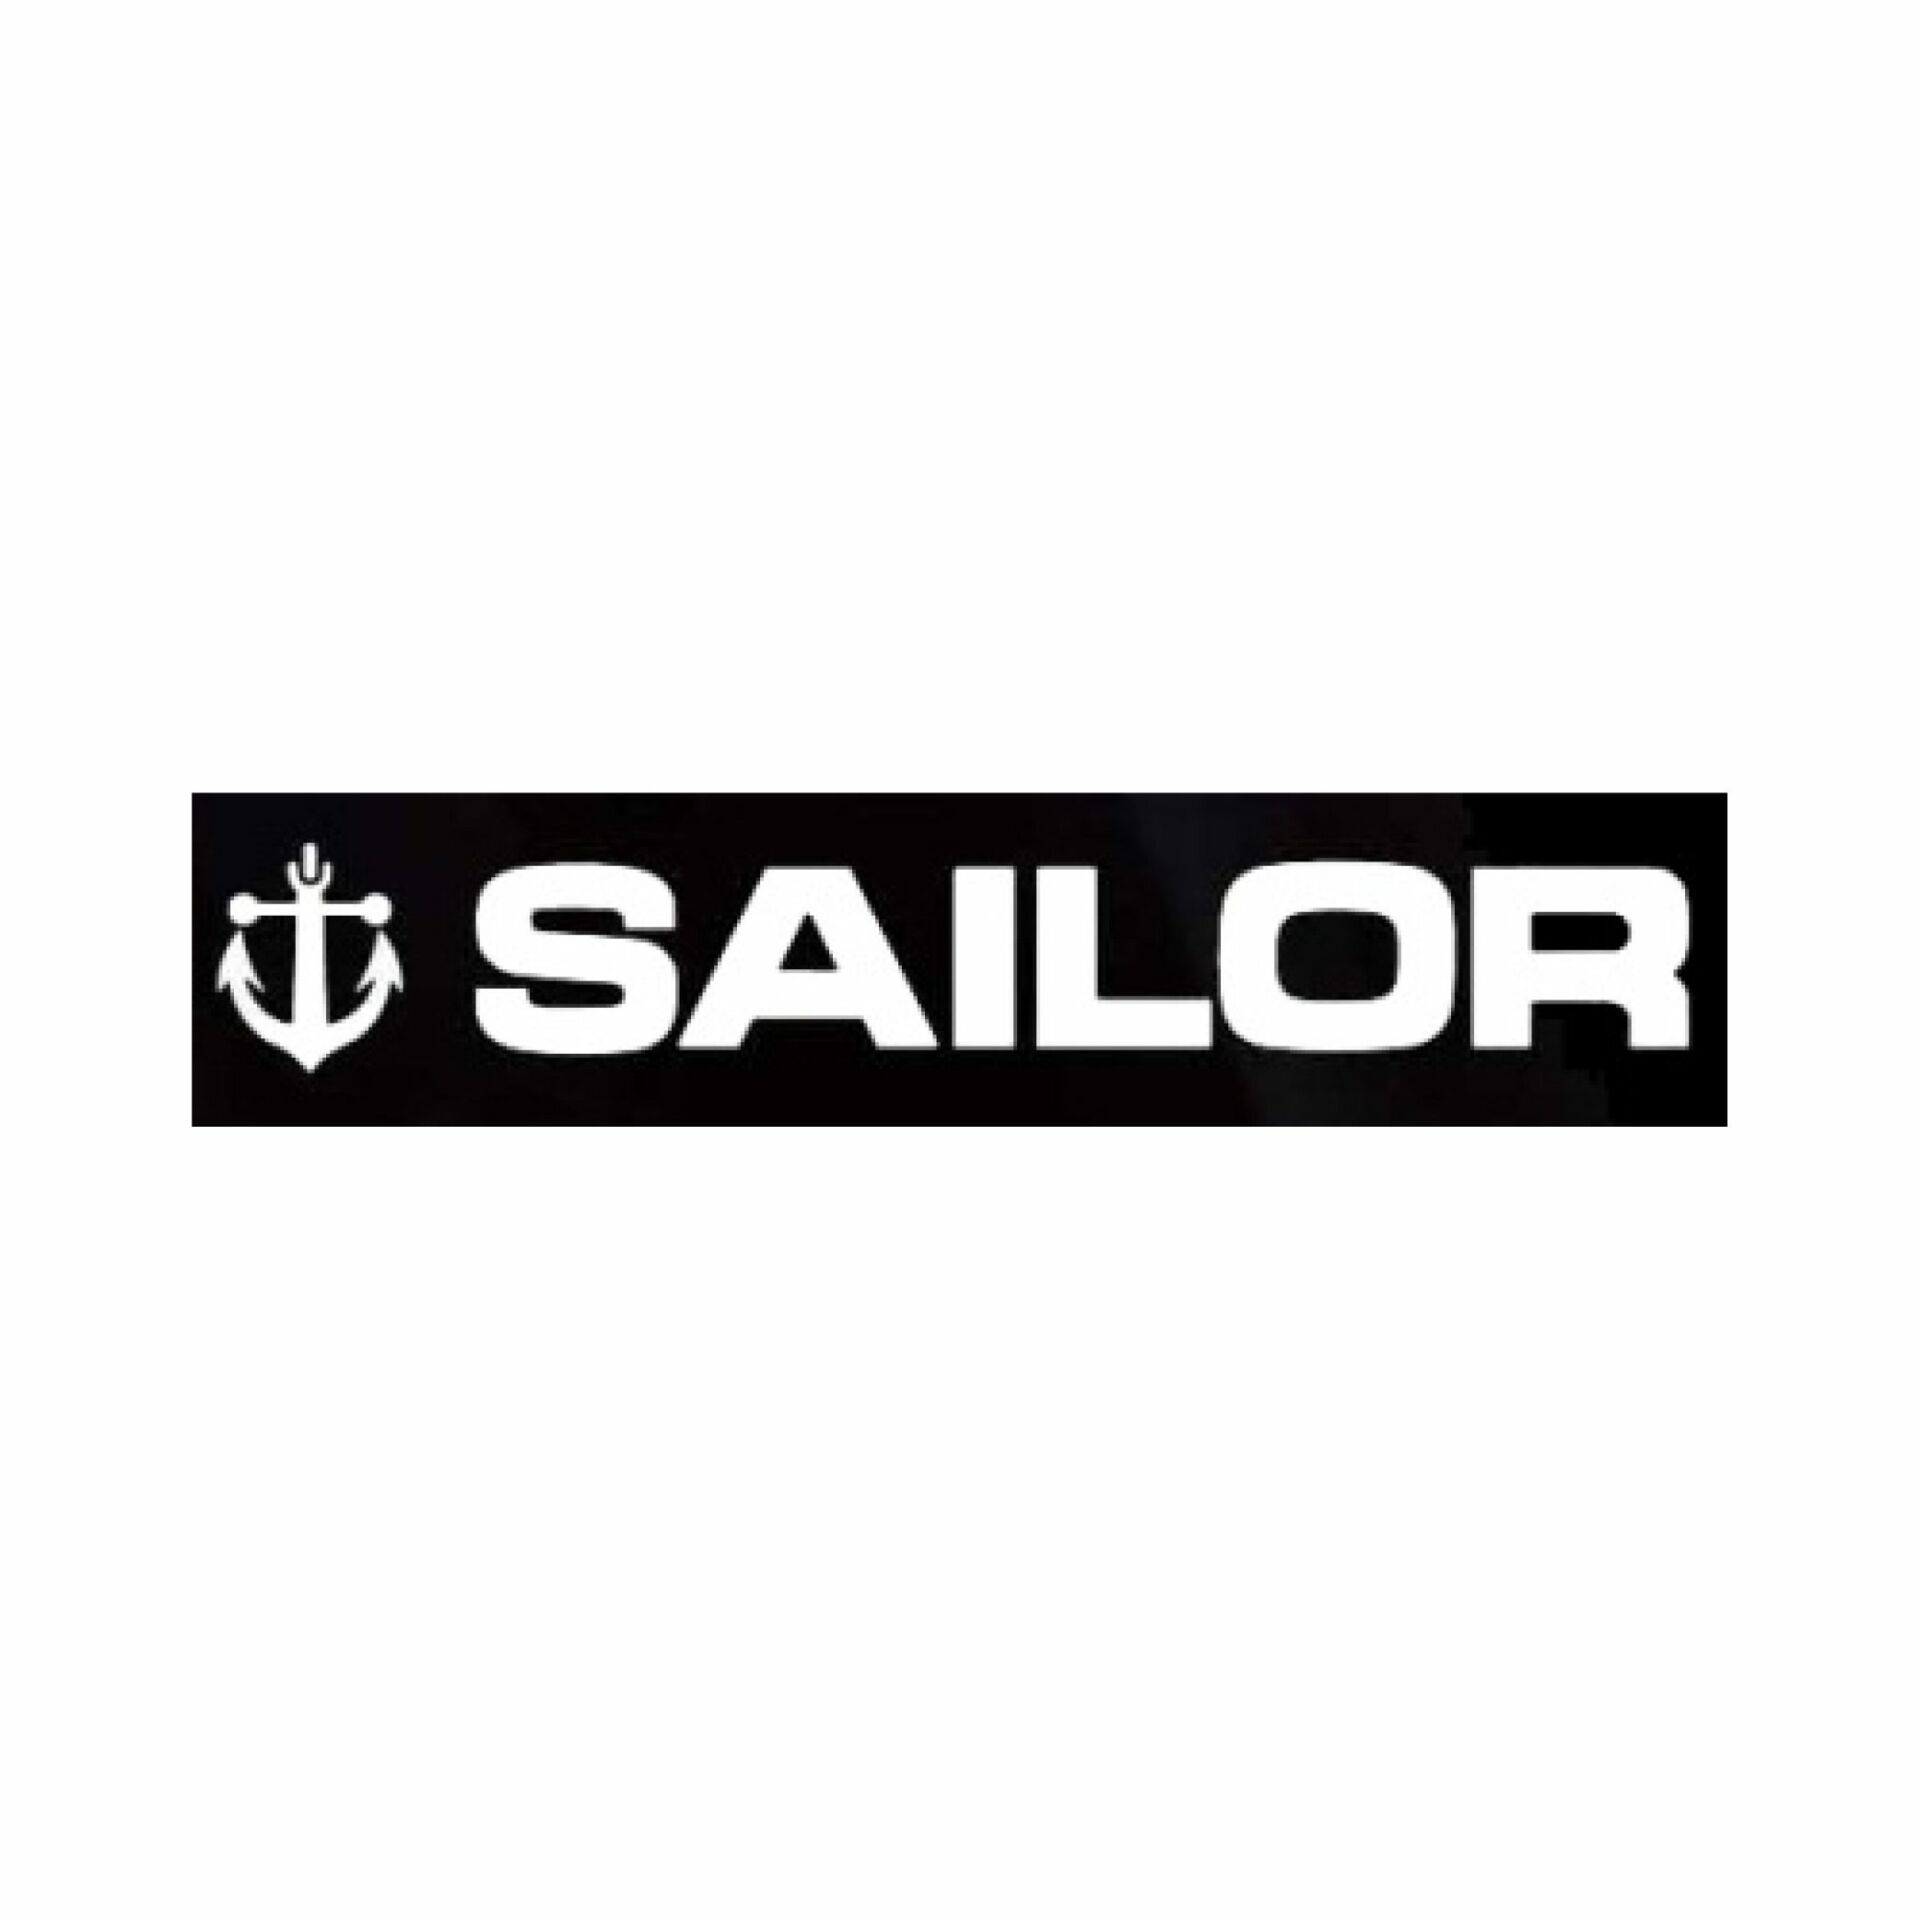 Sailor Inkt & Vullingen